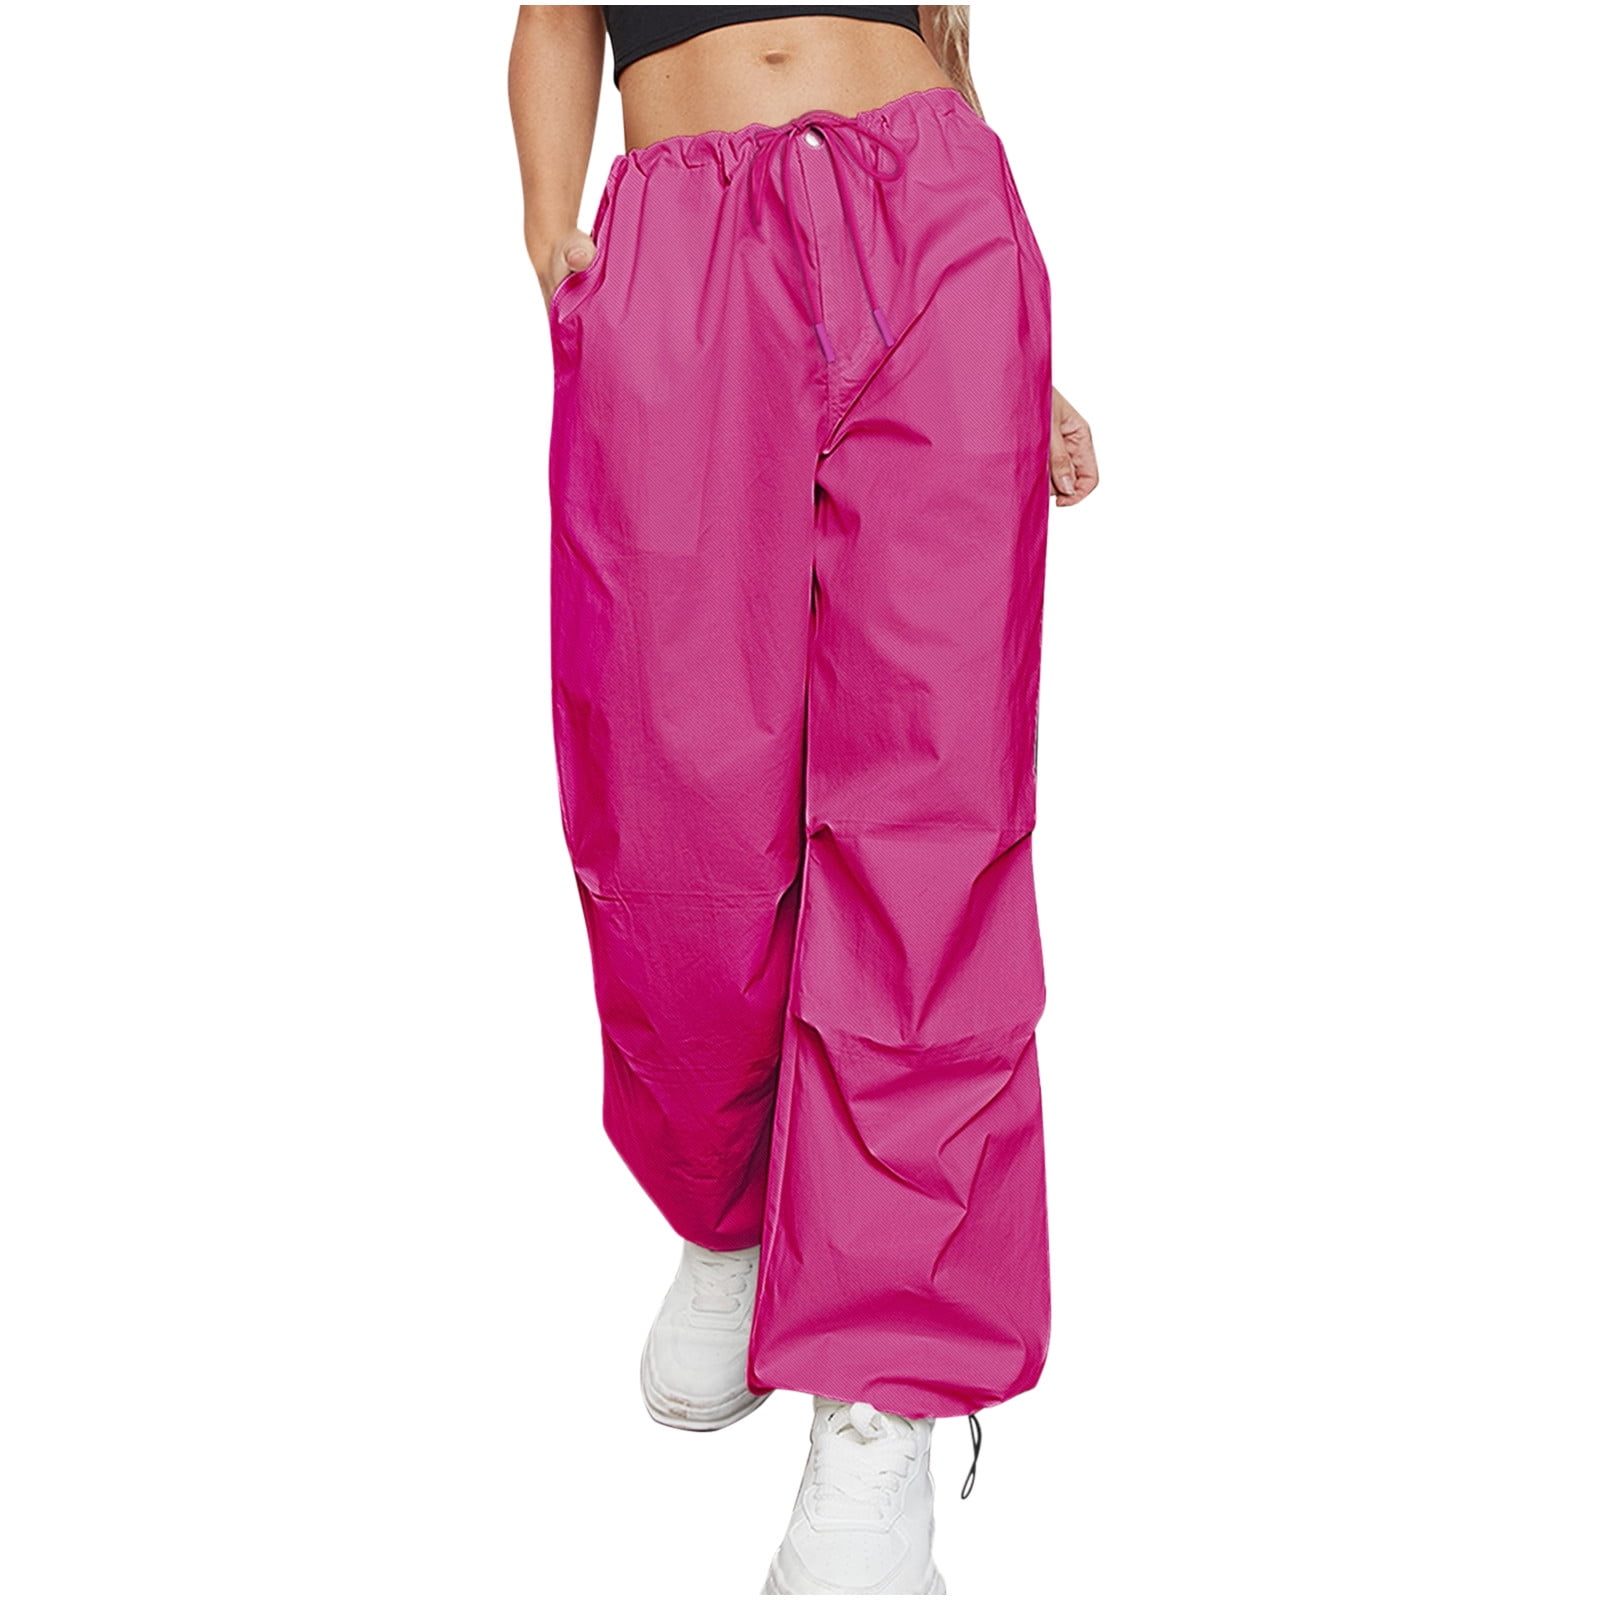 RYRJJ Women Baggy Low Waist Drawstring Cargo Pants Oversize Casual